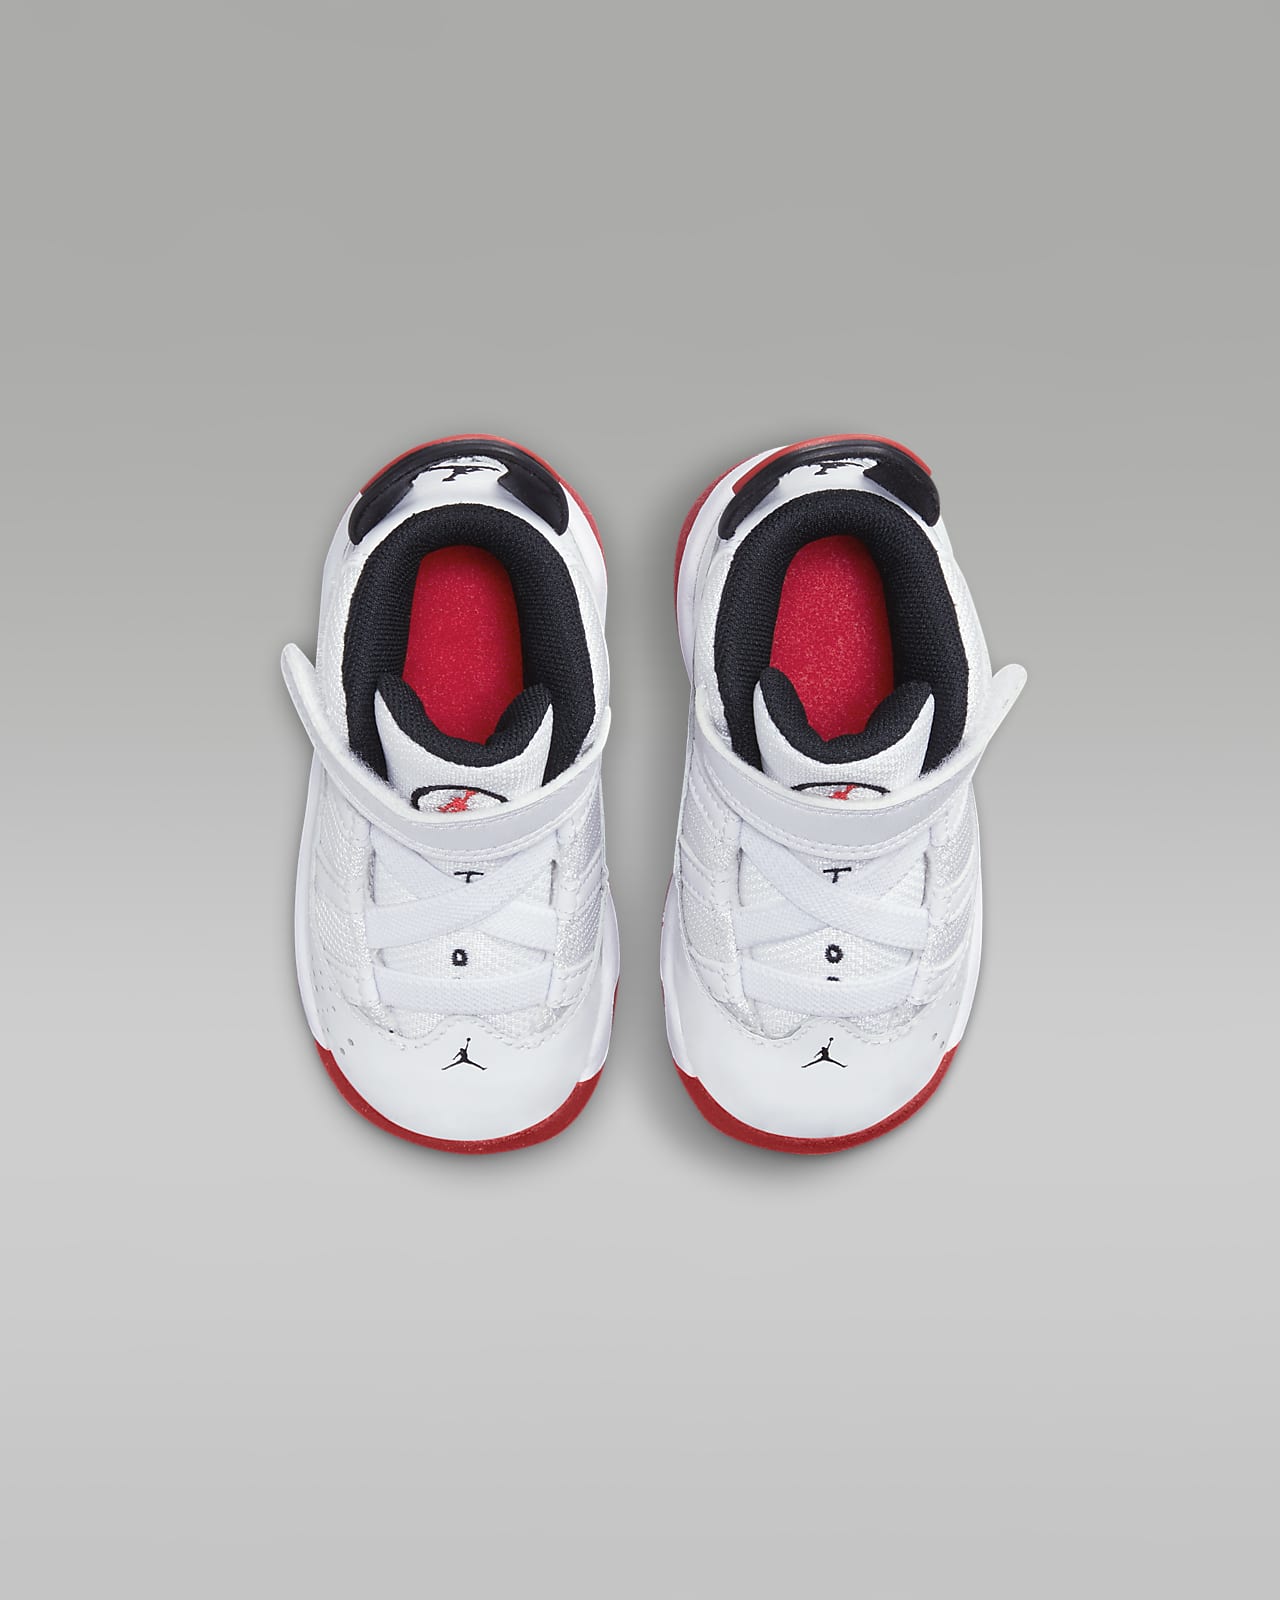 Goodwill komplikationer ydre Jordan 6 Rings-sko til babyer/småbørn. Nike DK